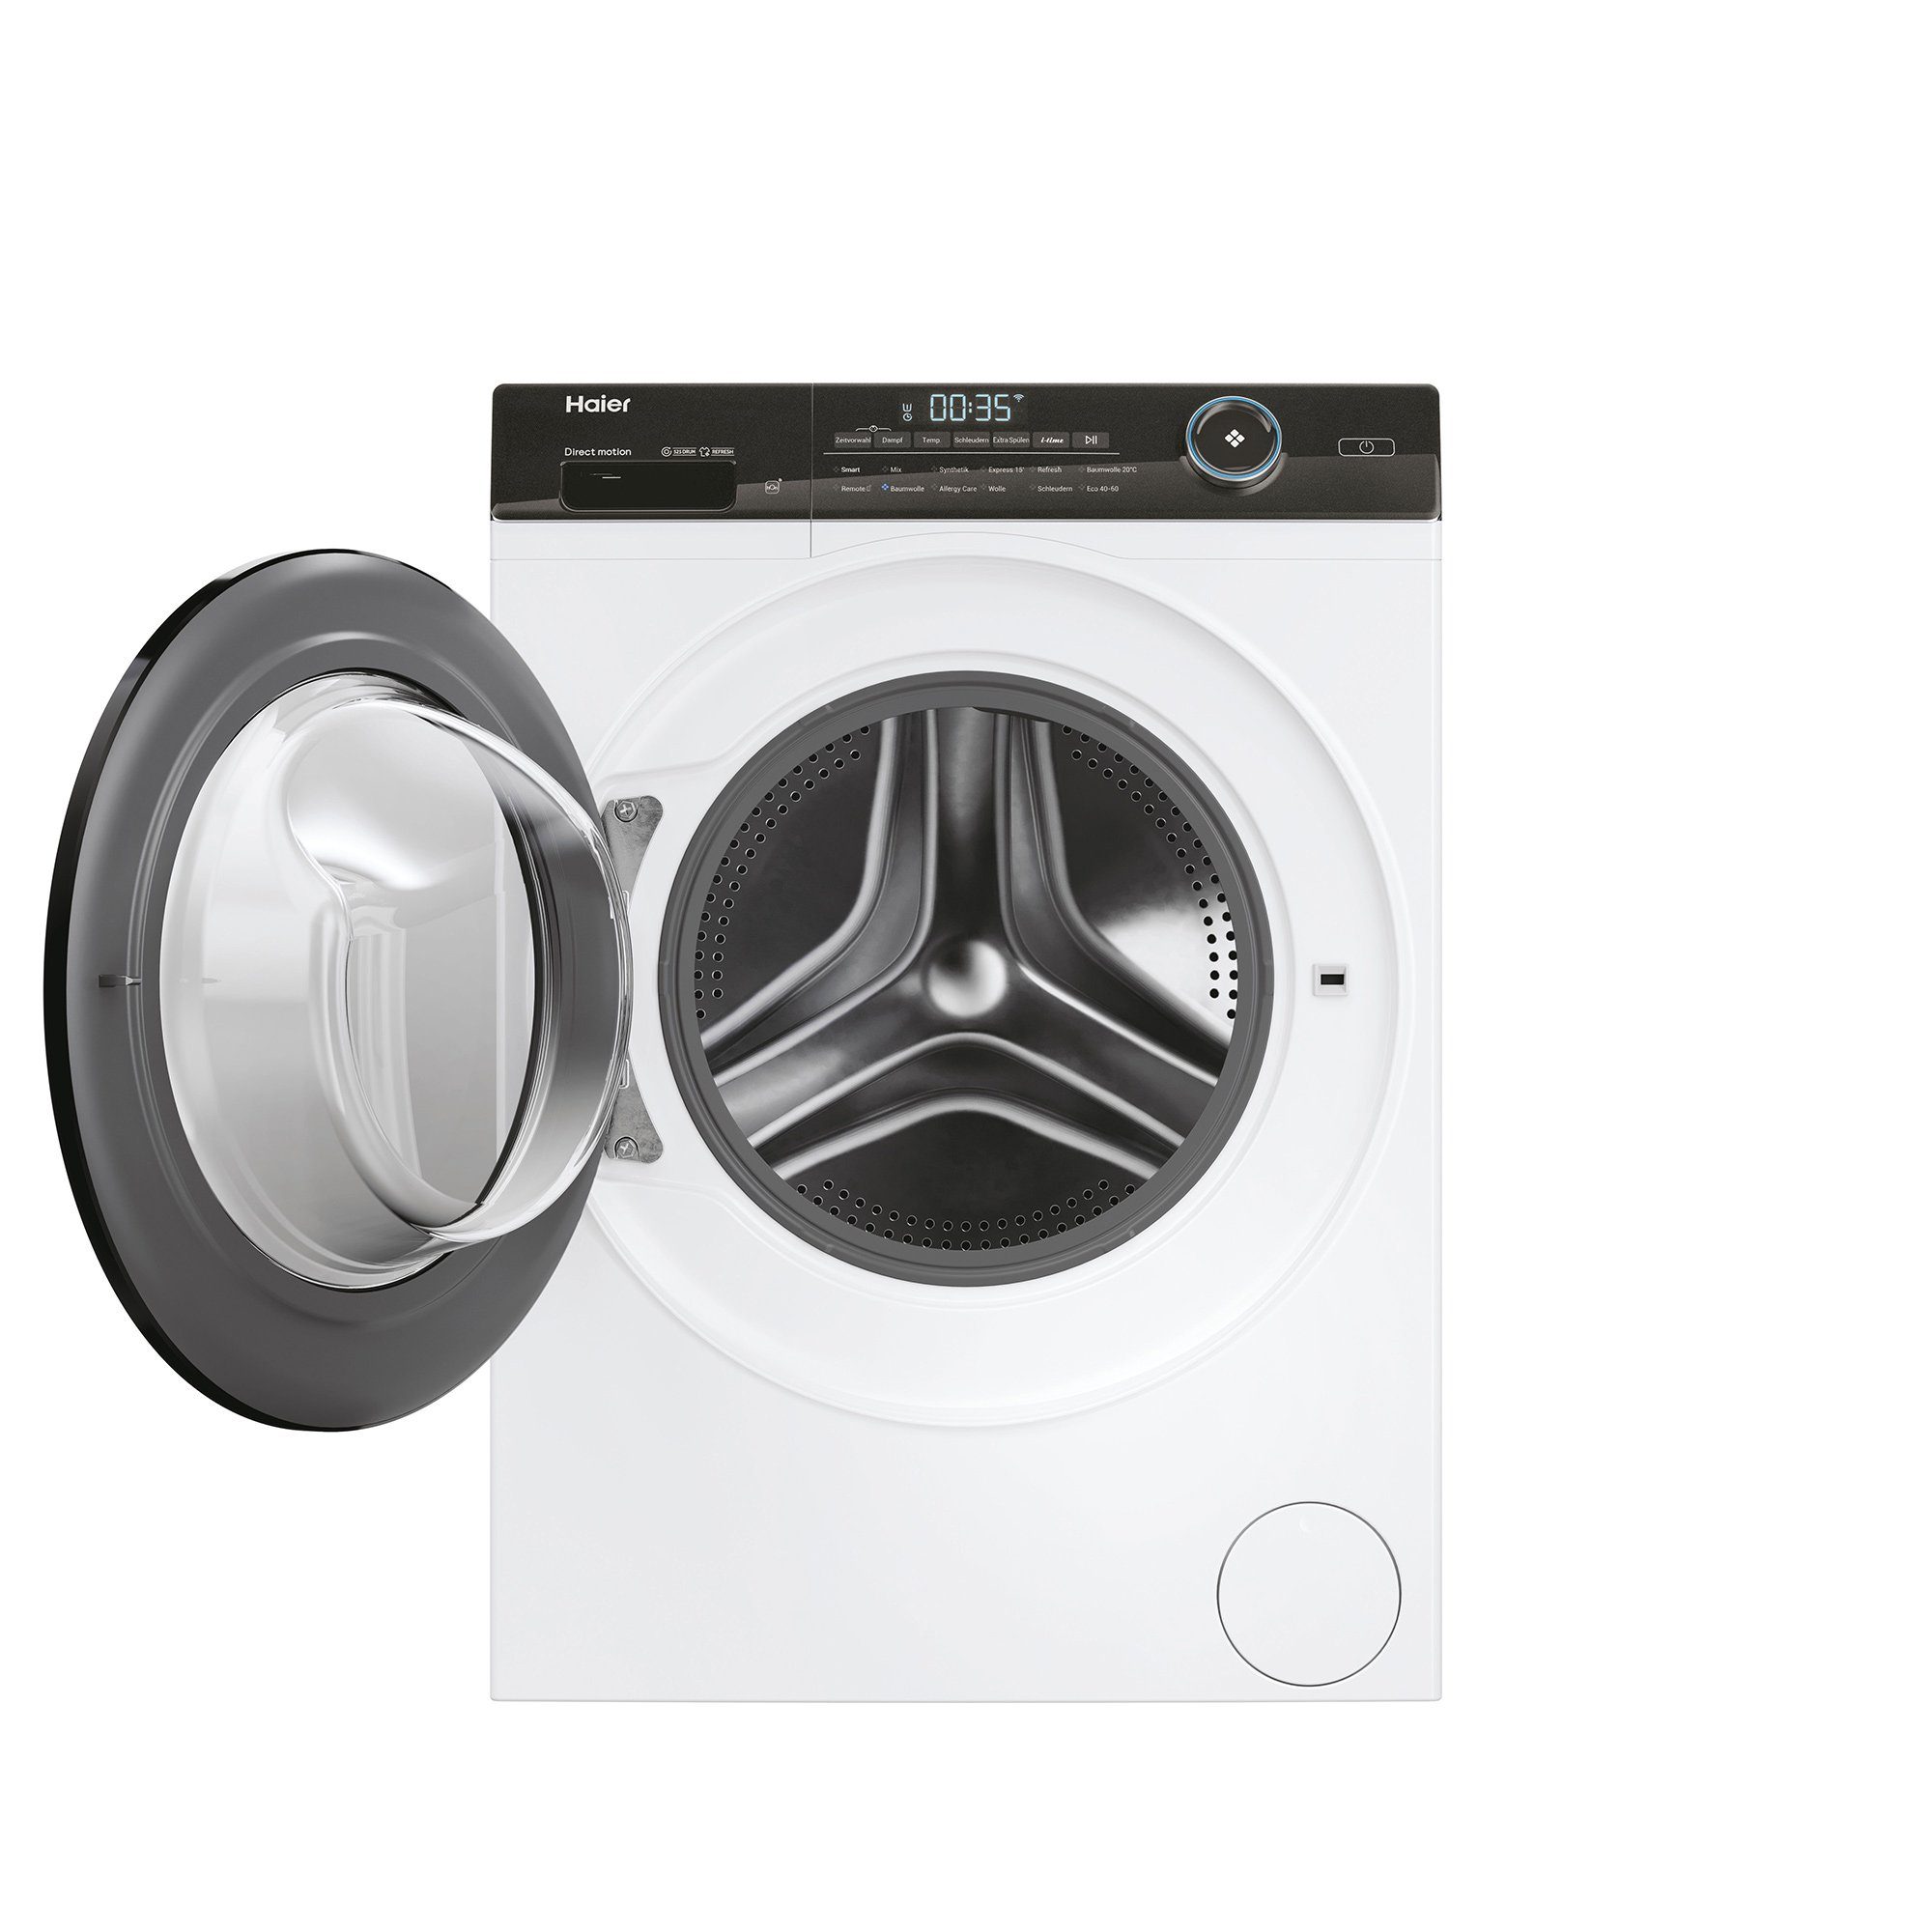 i-Time, Smart Haier Waschmaschine U/min, kg, 1400 hOn App, Refres HW90-B14TEAM5, 9,00